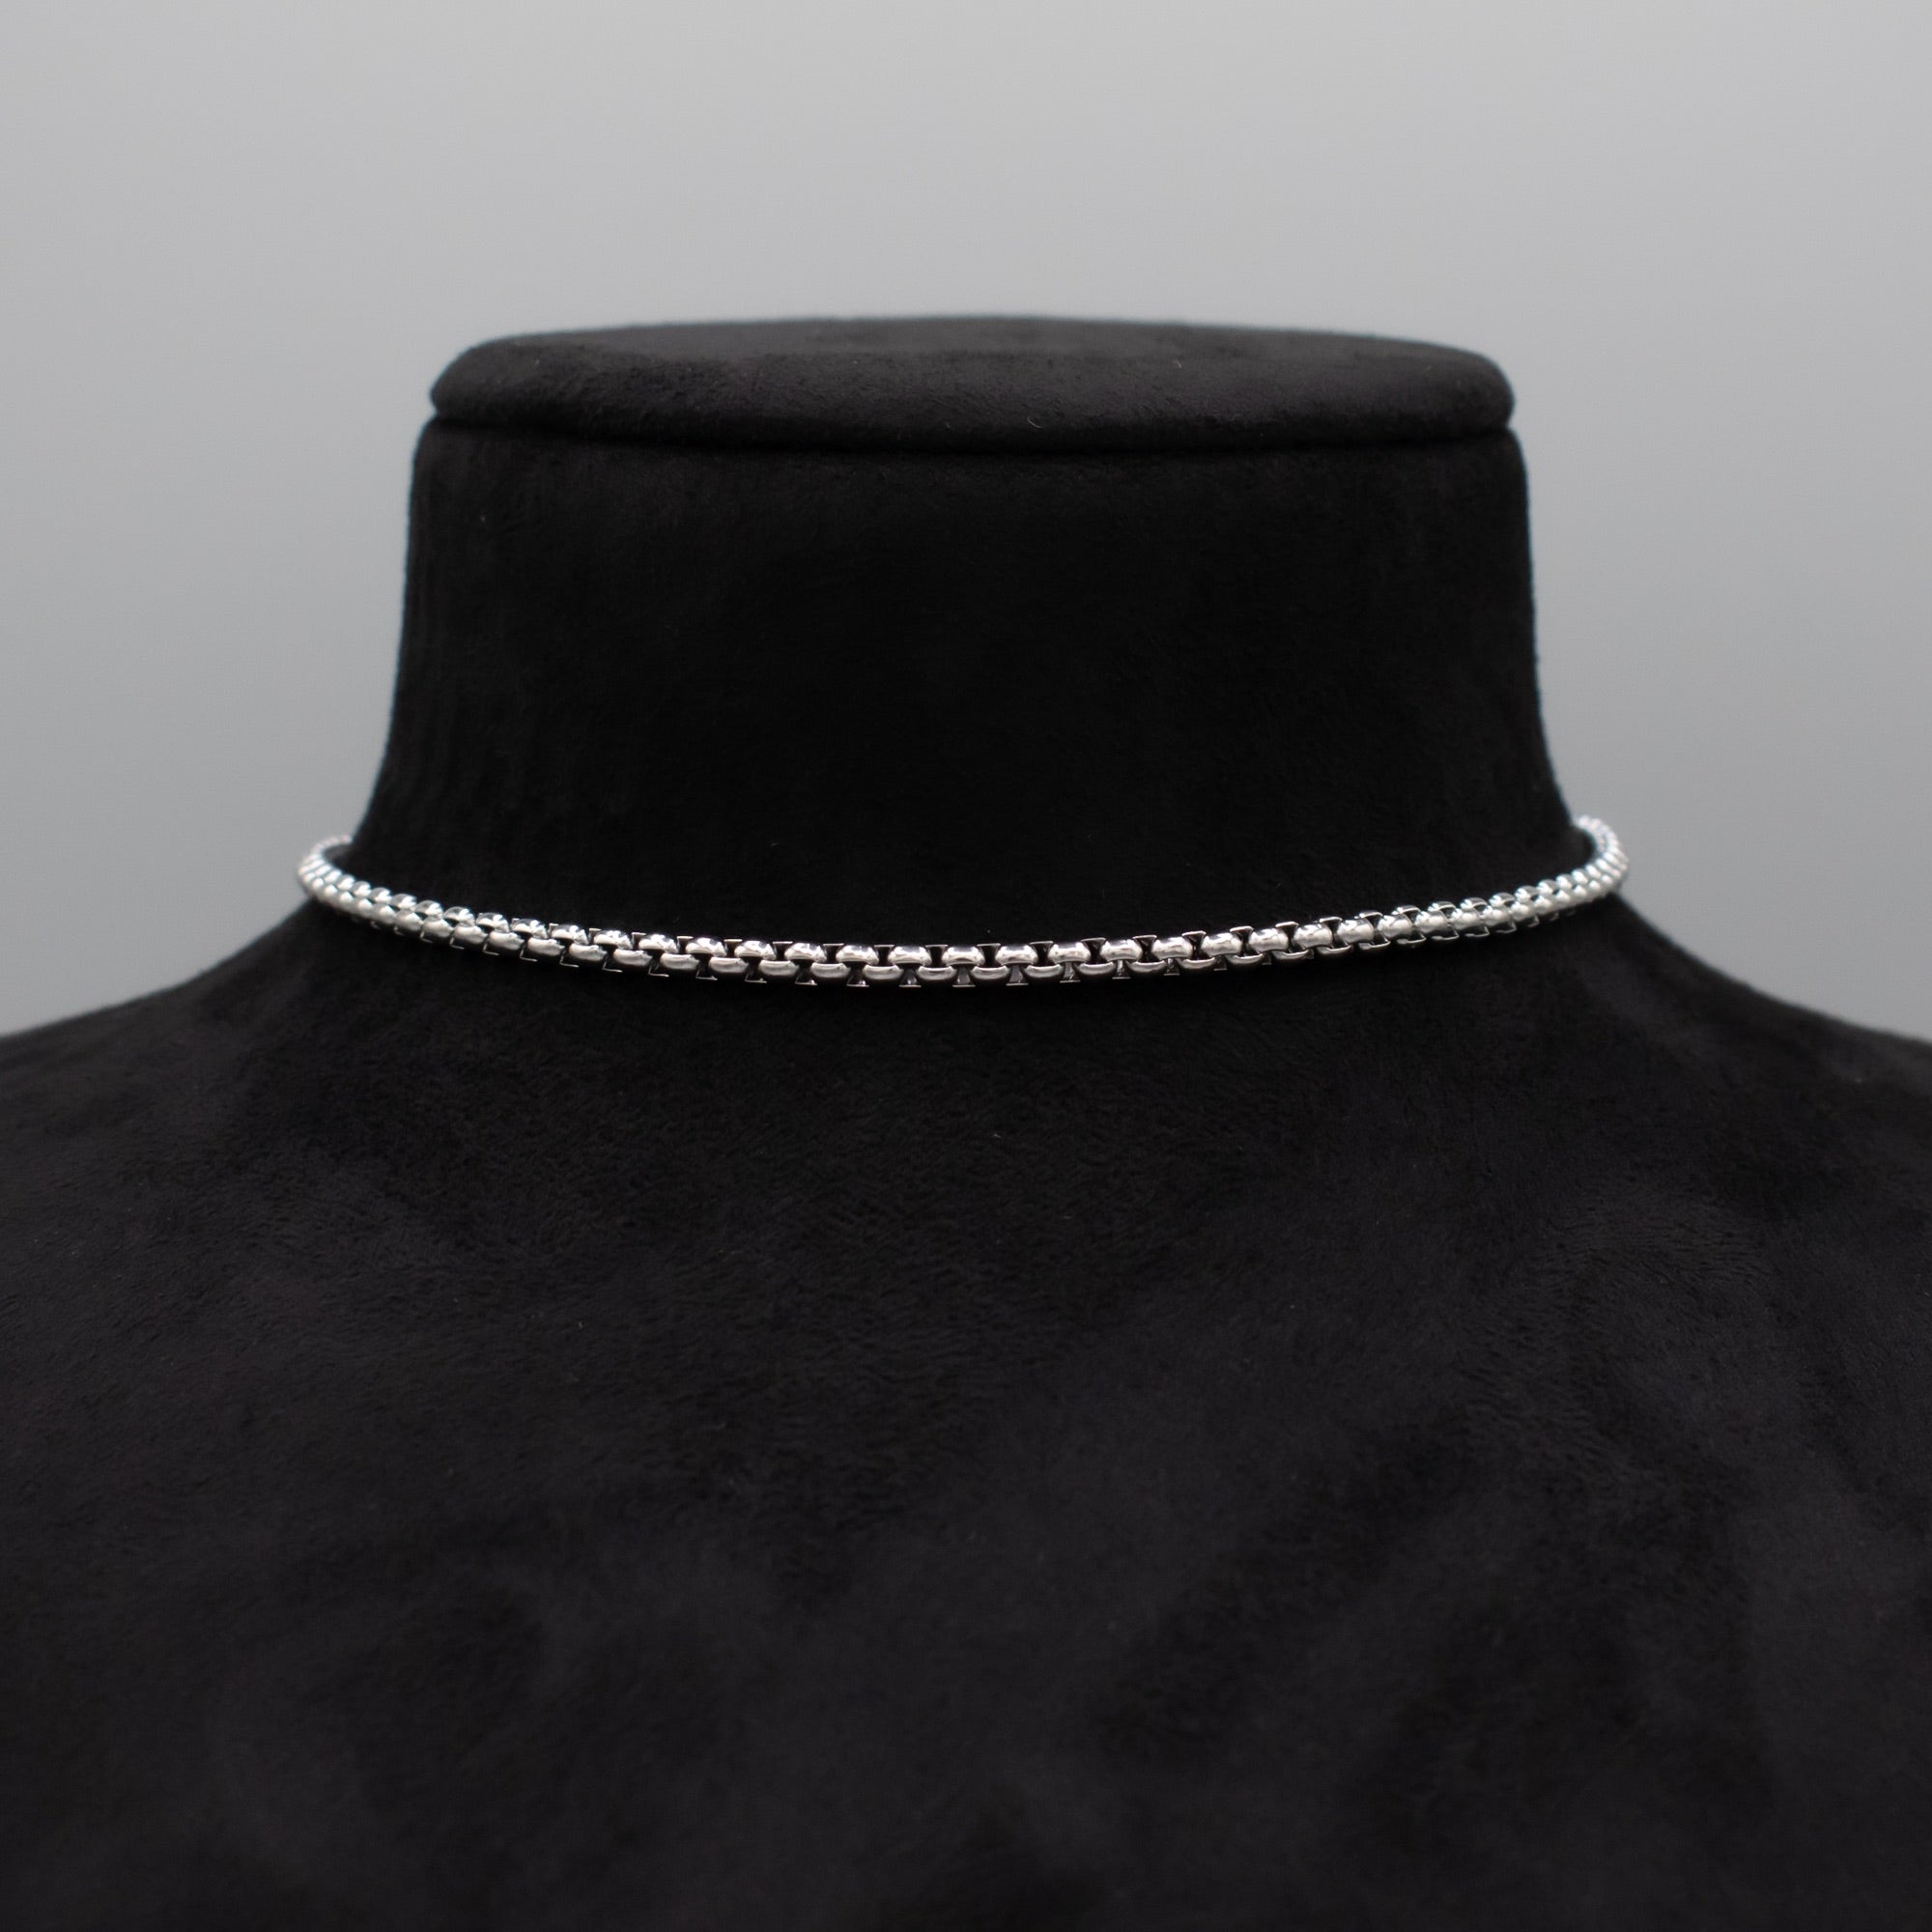 Plain Box Chain Choker Necklace - (Silver) 4mm